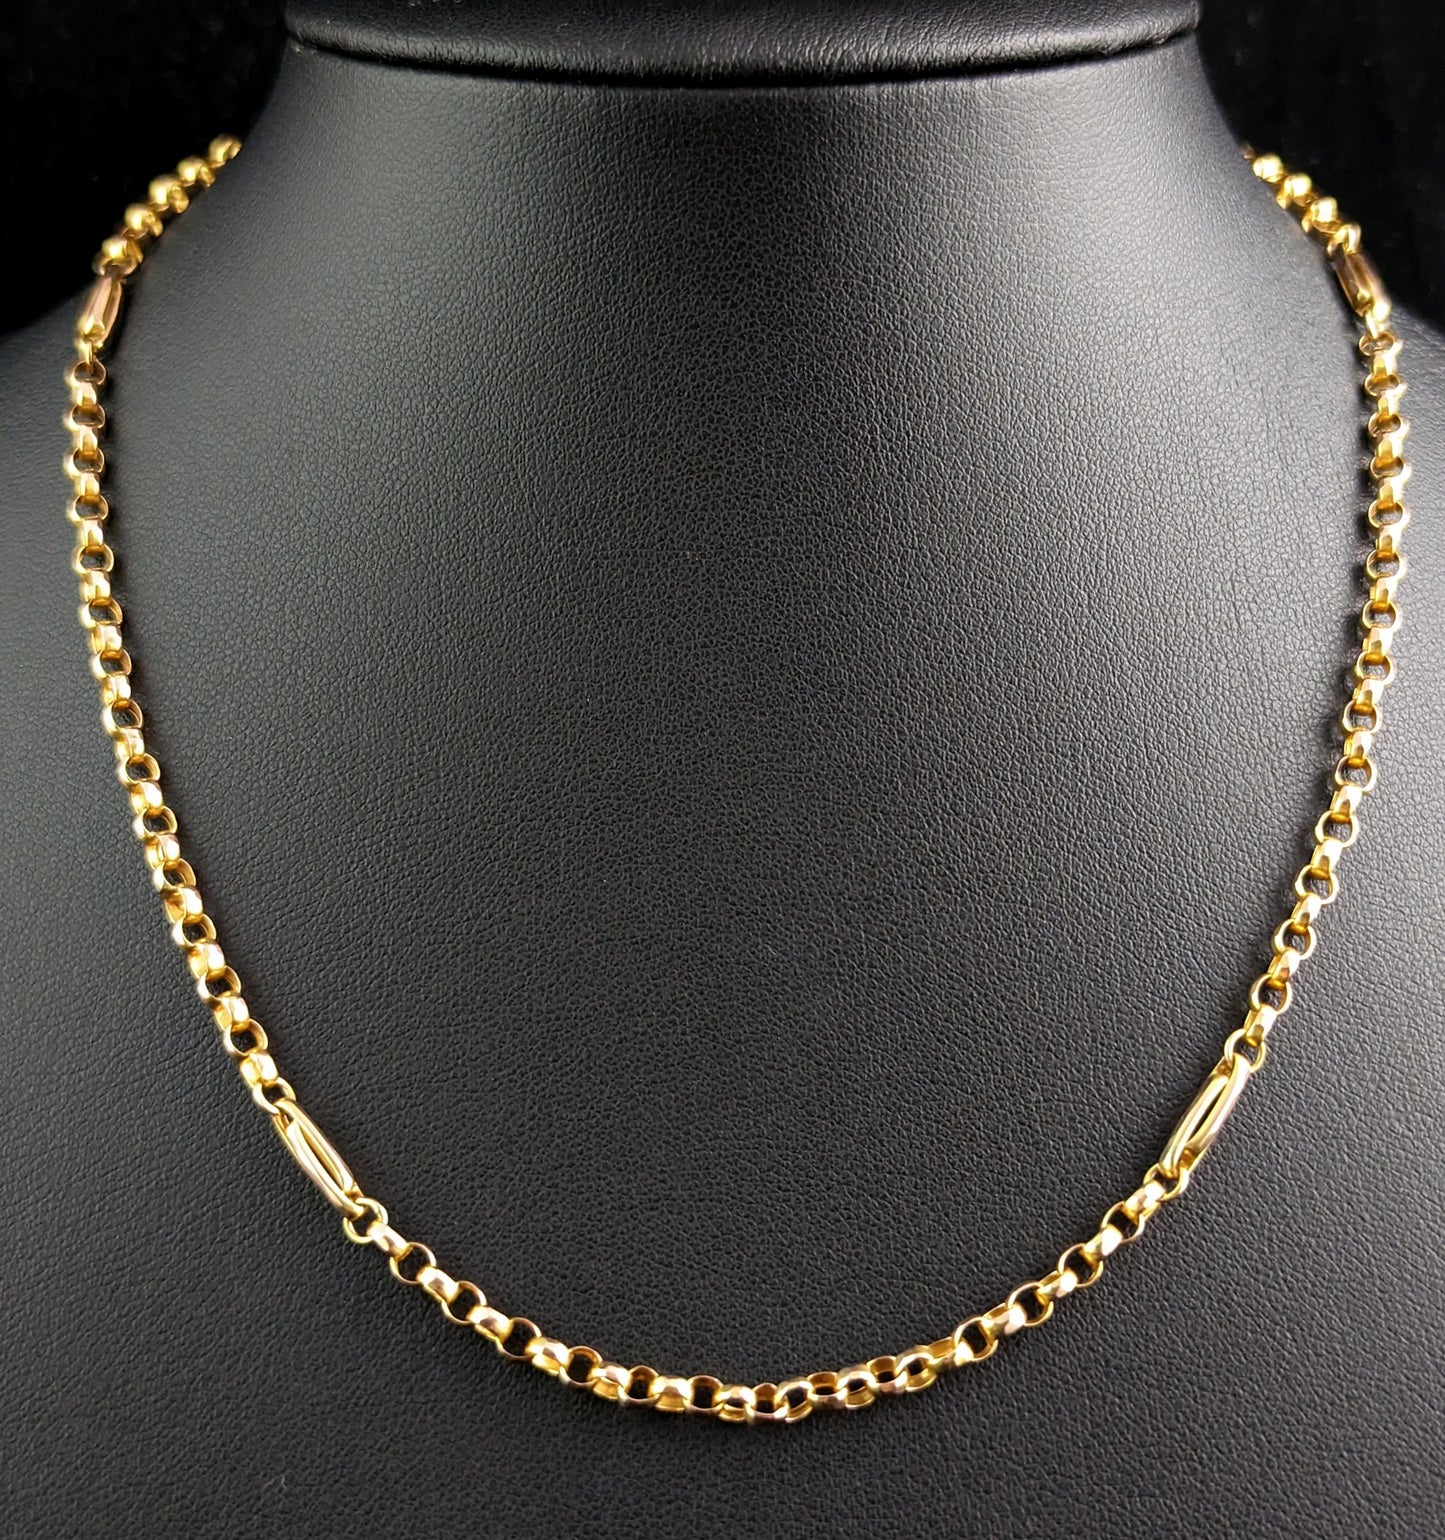 Antique 9ct gold chain necklace, Fancy link, Edwardian